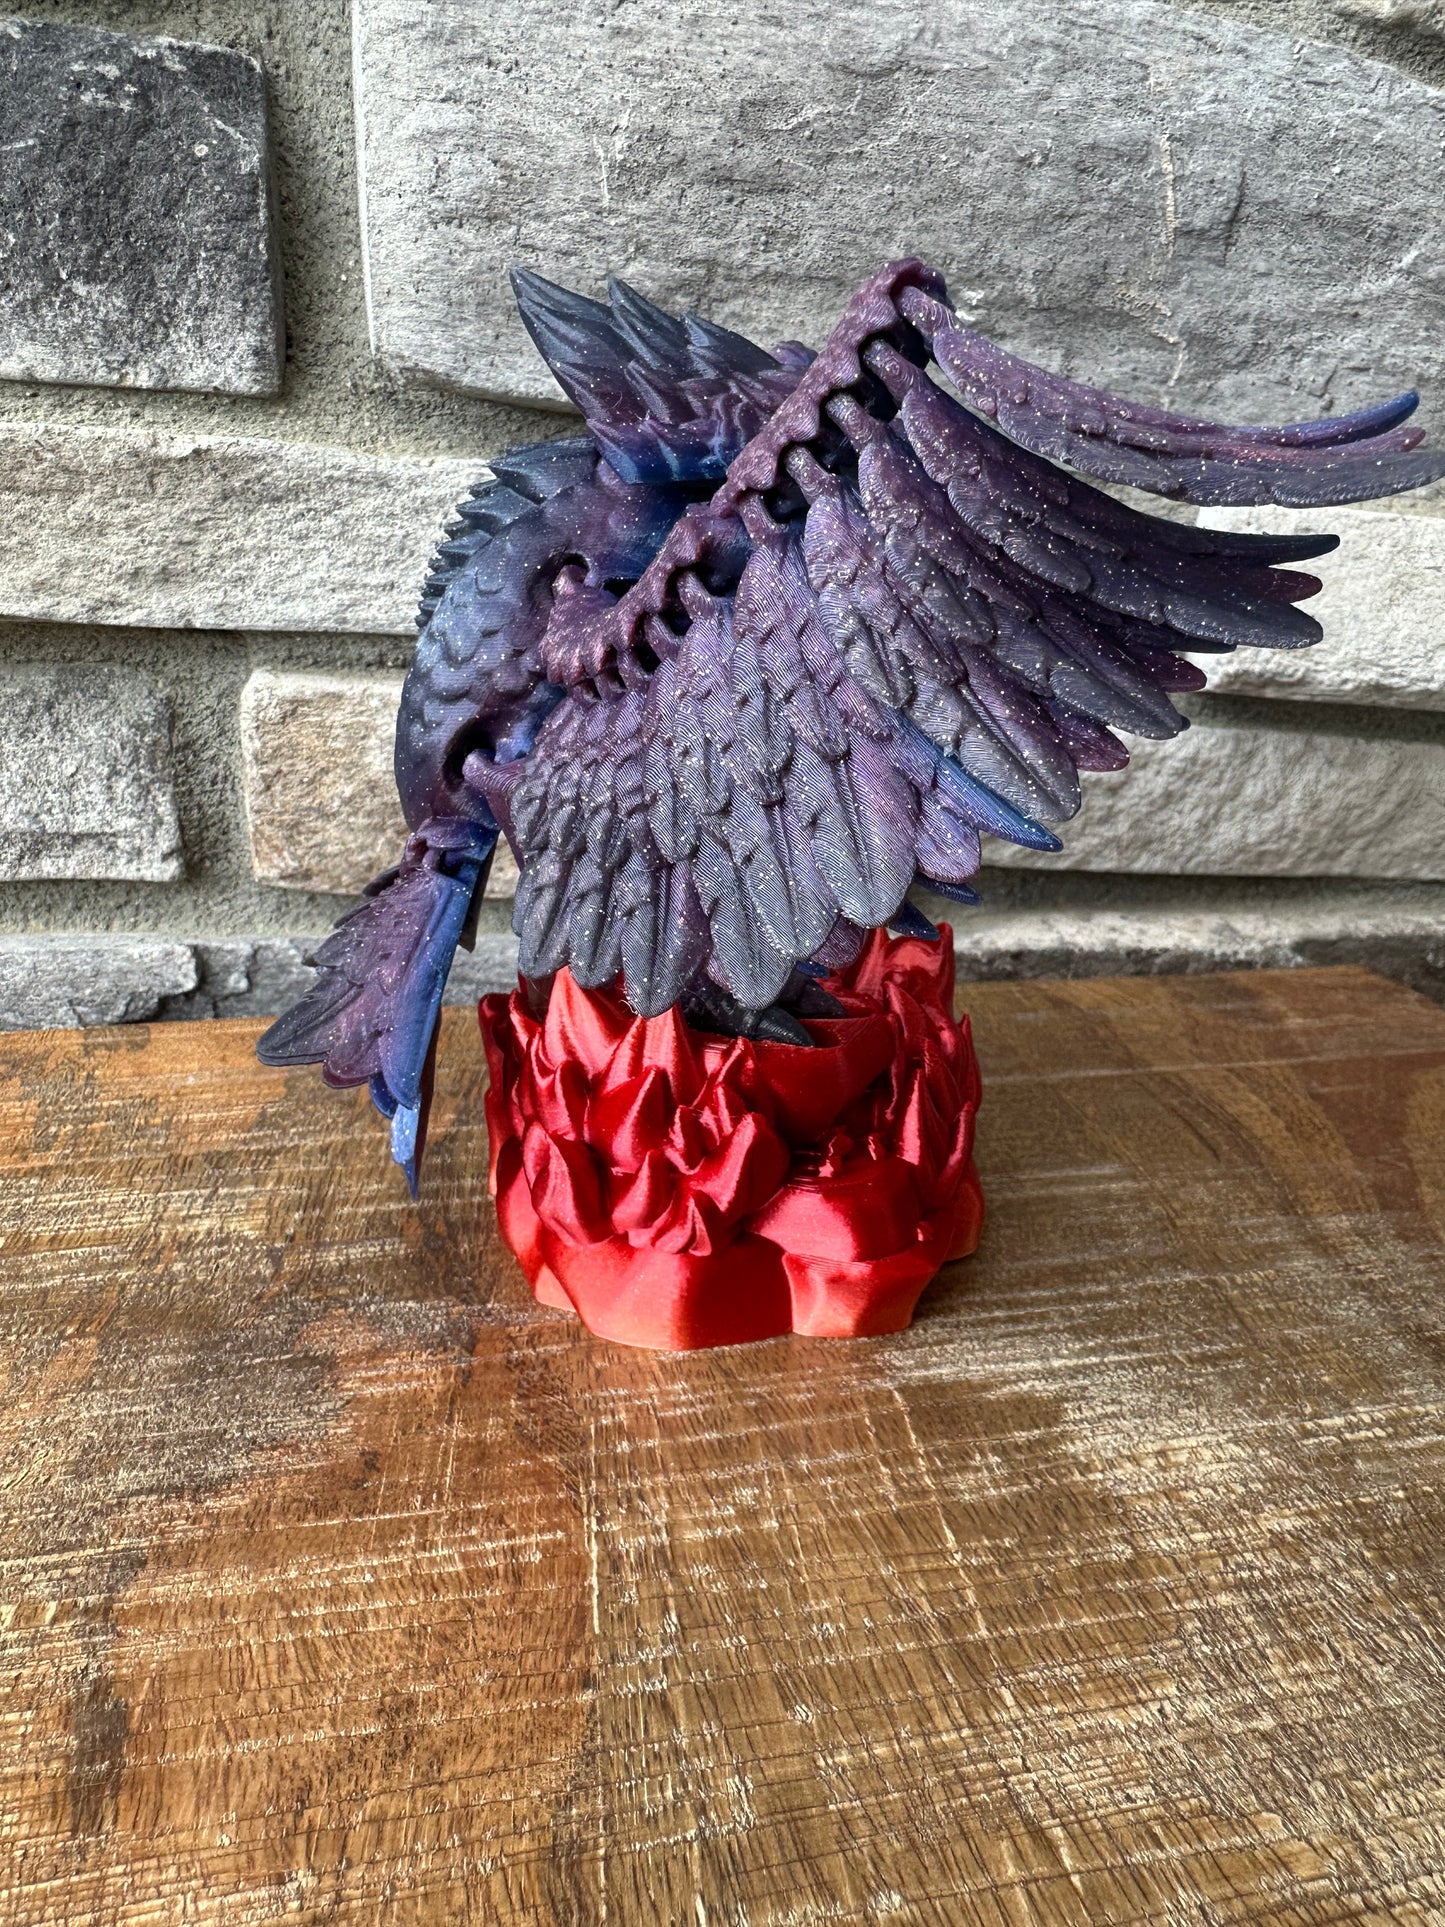 Phoenix Fire Stand | 3D Printed | Articulated Flexible | Custom Fidget Toy | Halloween Decoration